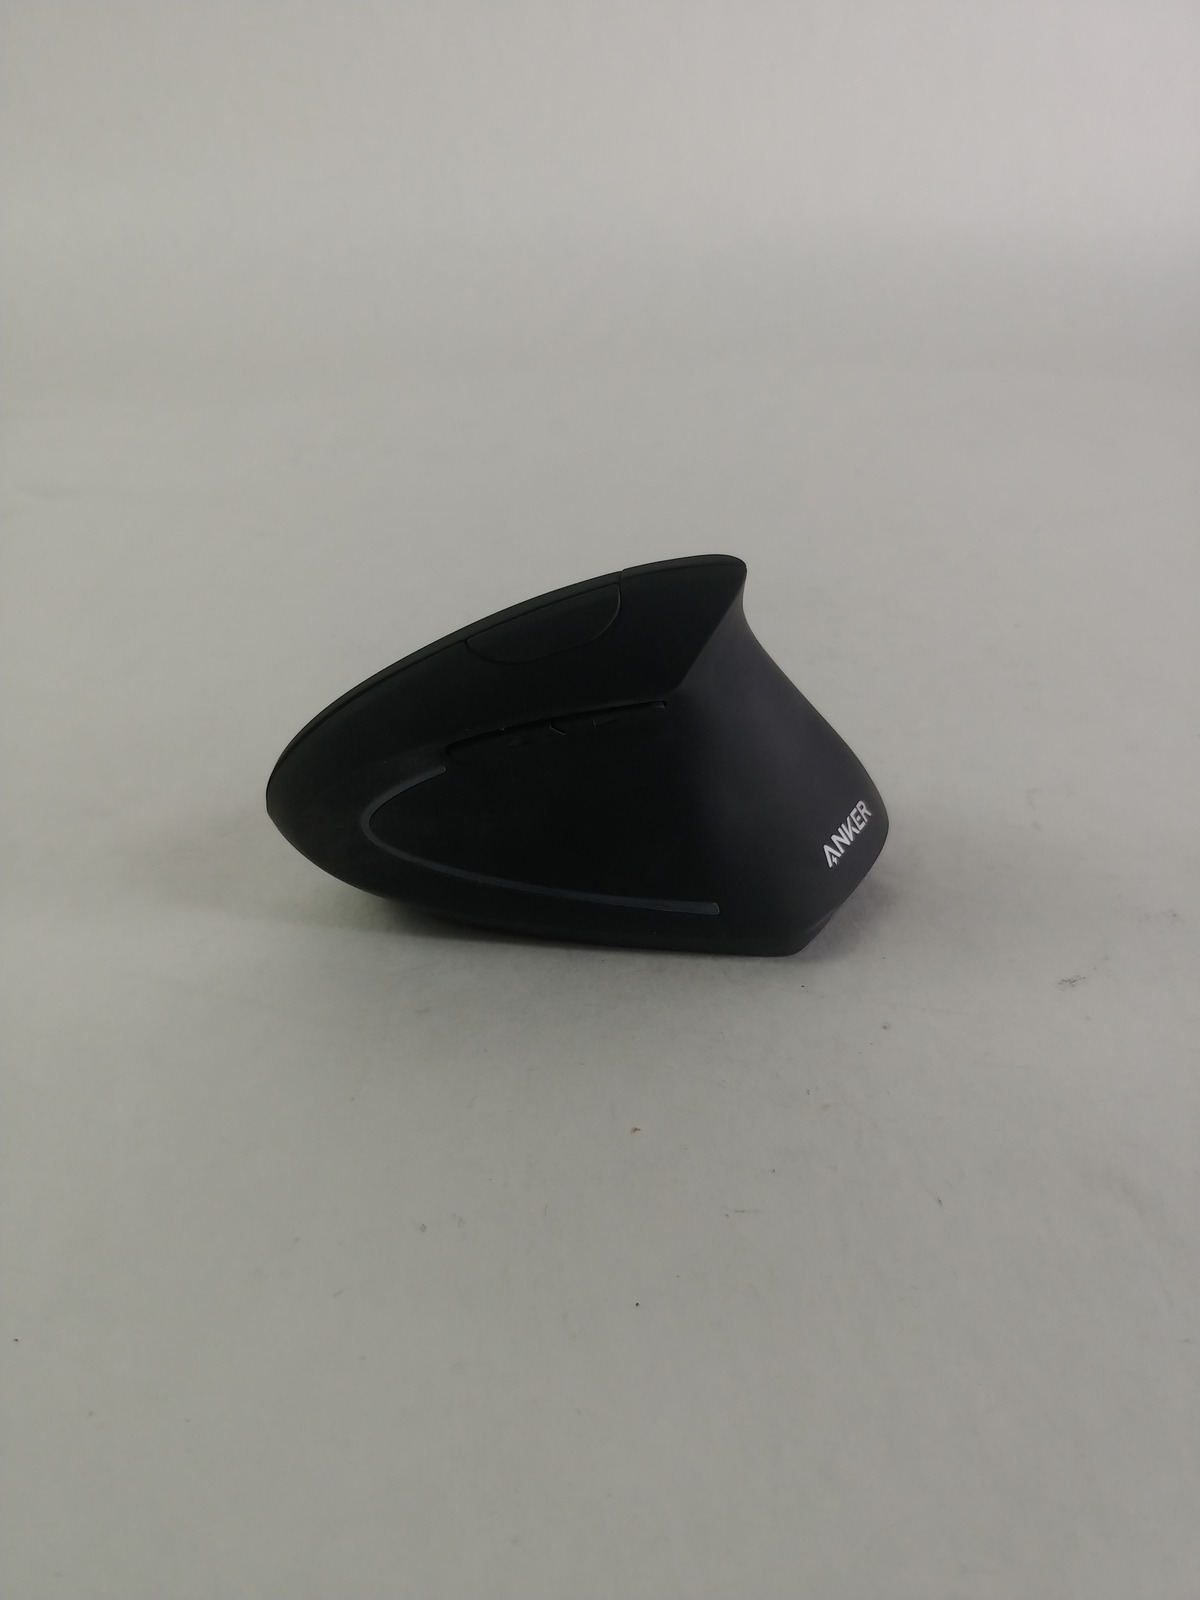 Anker A7852M 2.4G Wireless 6 Button Vertical Ergonomic Optical Mouse